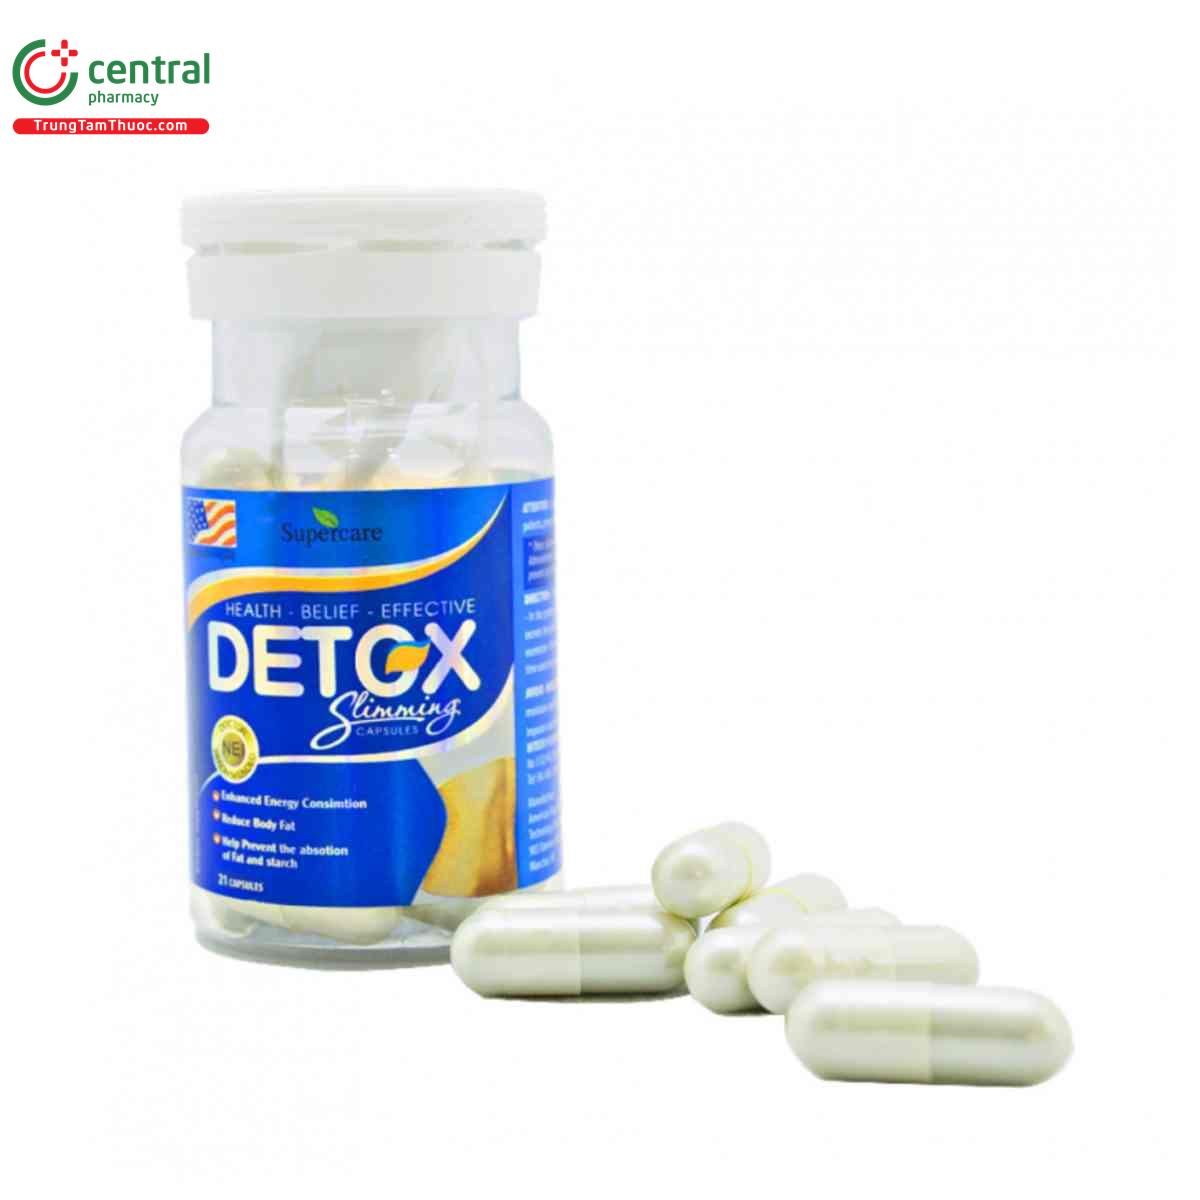 detox slimming capsules 6 P6572